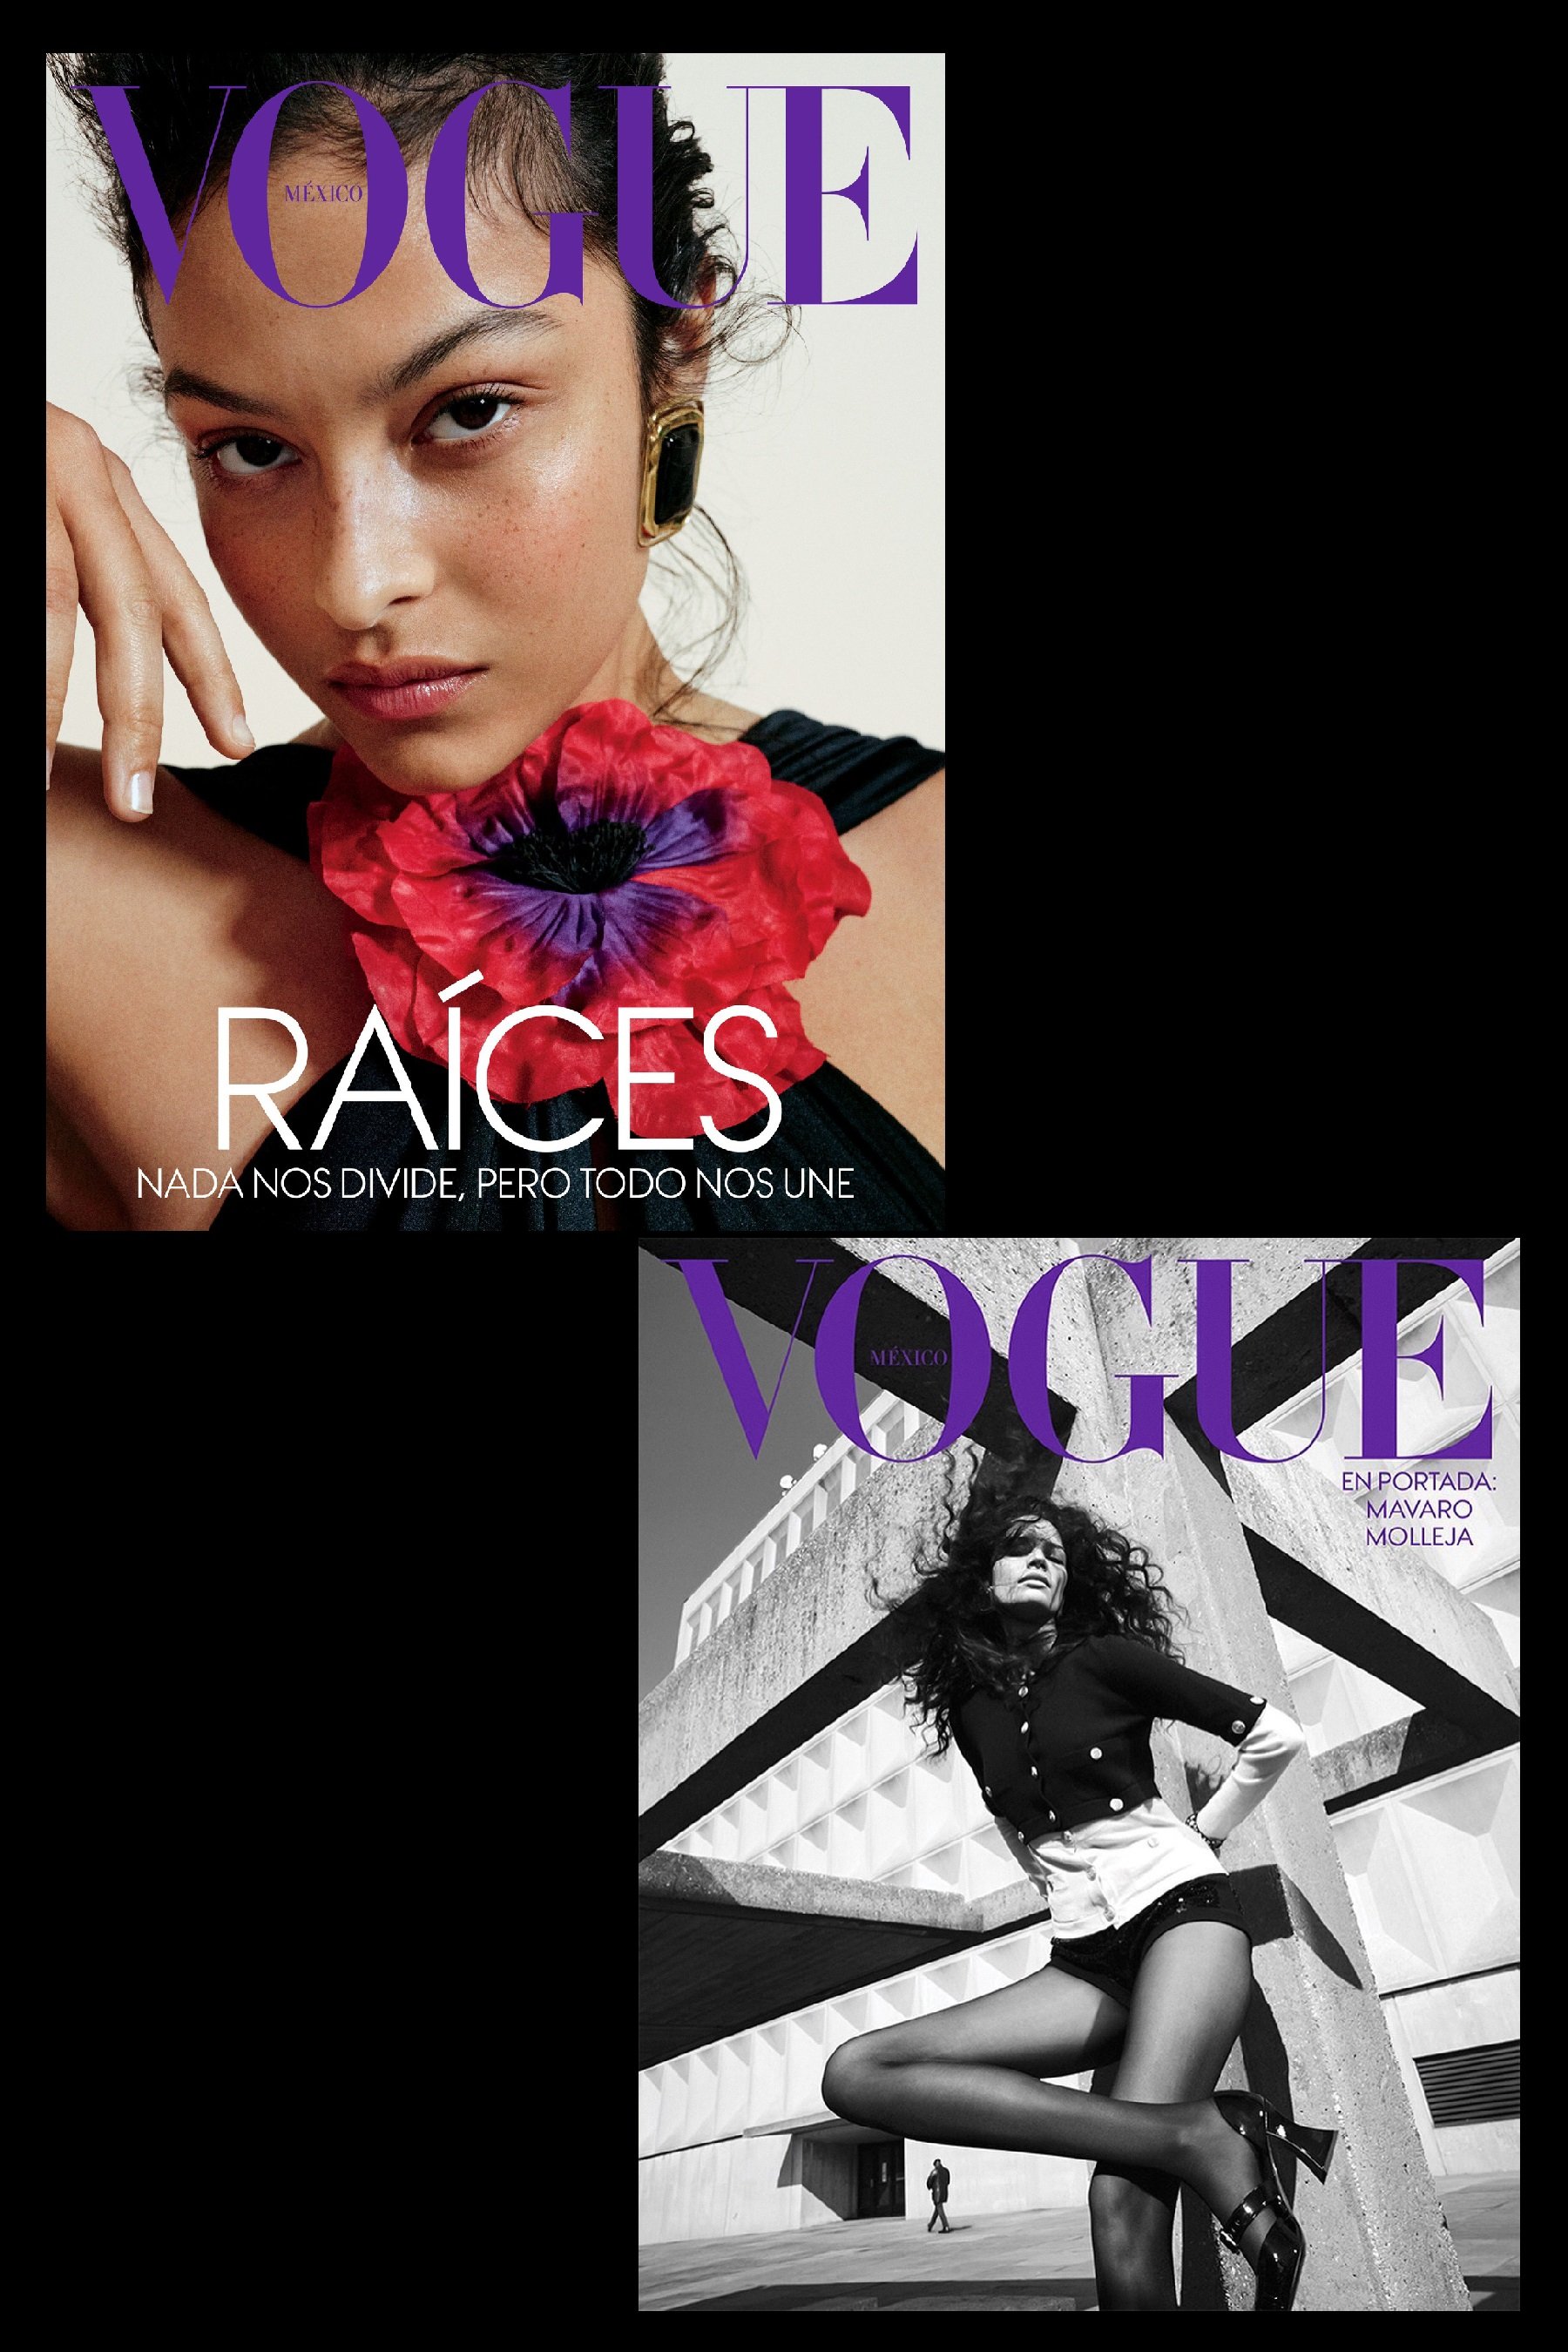 Emma-Summerton-Vogue-Mexico-Latin-America Covers-21.jpg